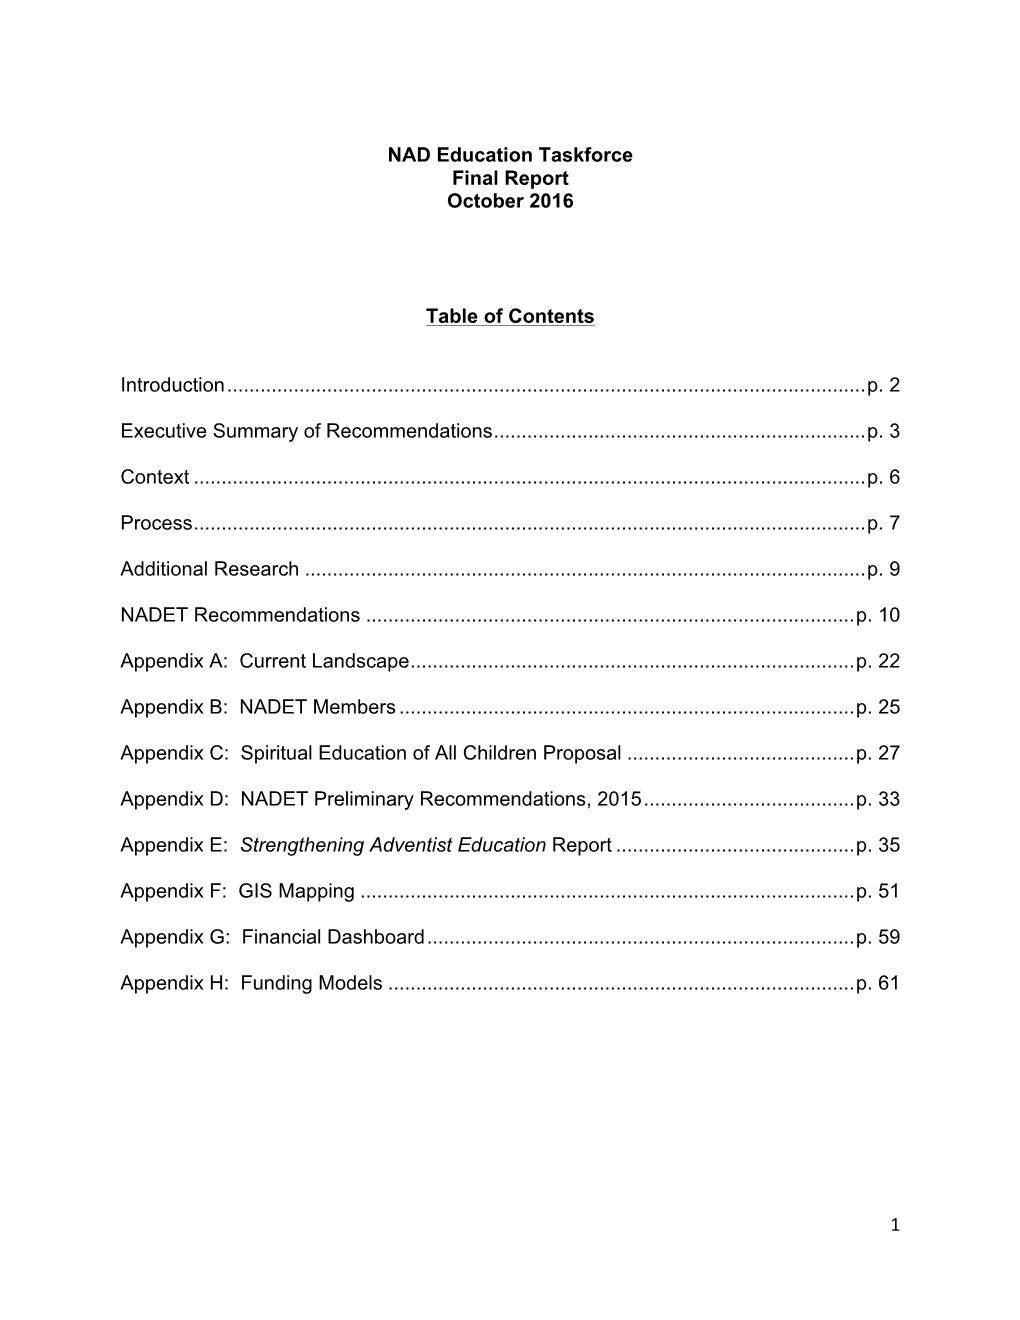 1 NAD Education Taskforce Final Report October 2016 Table